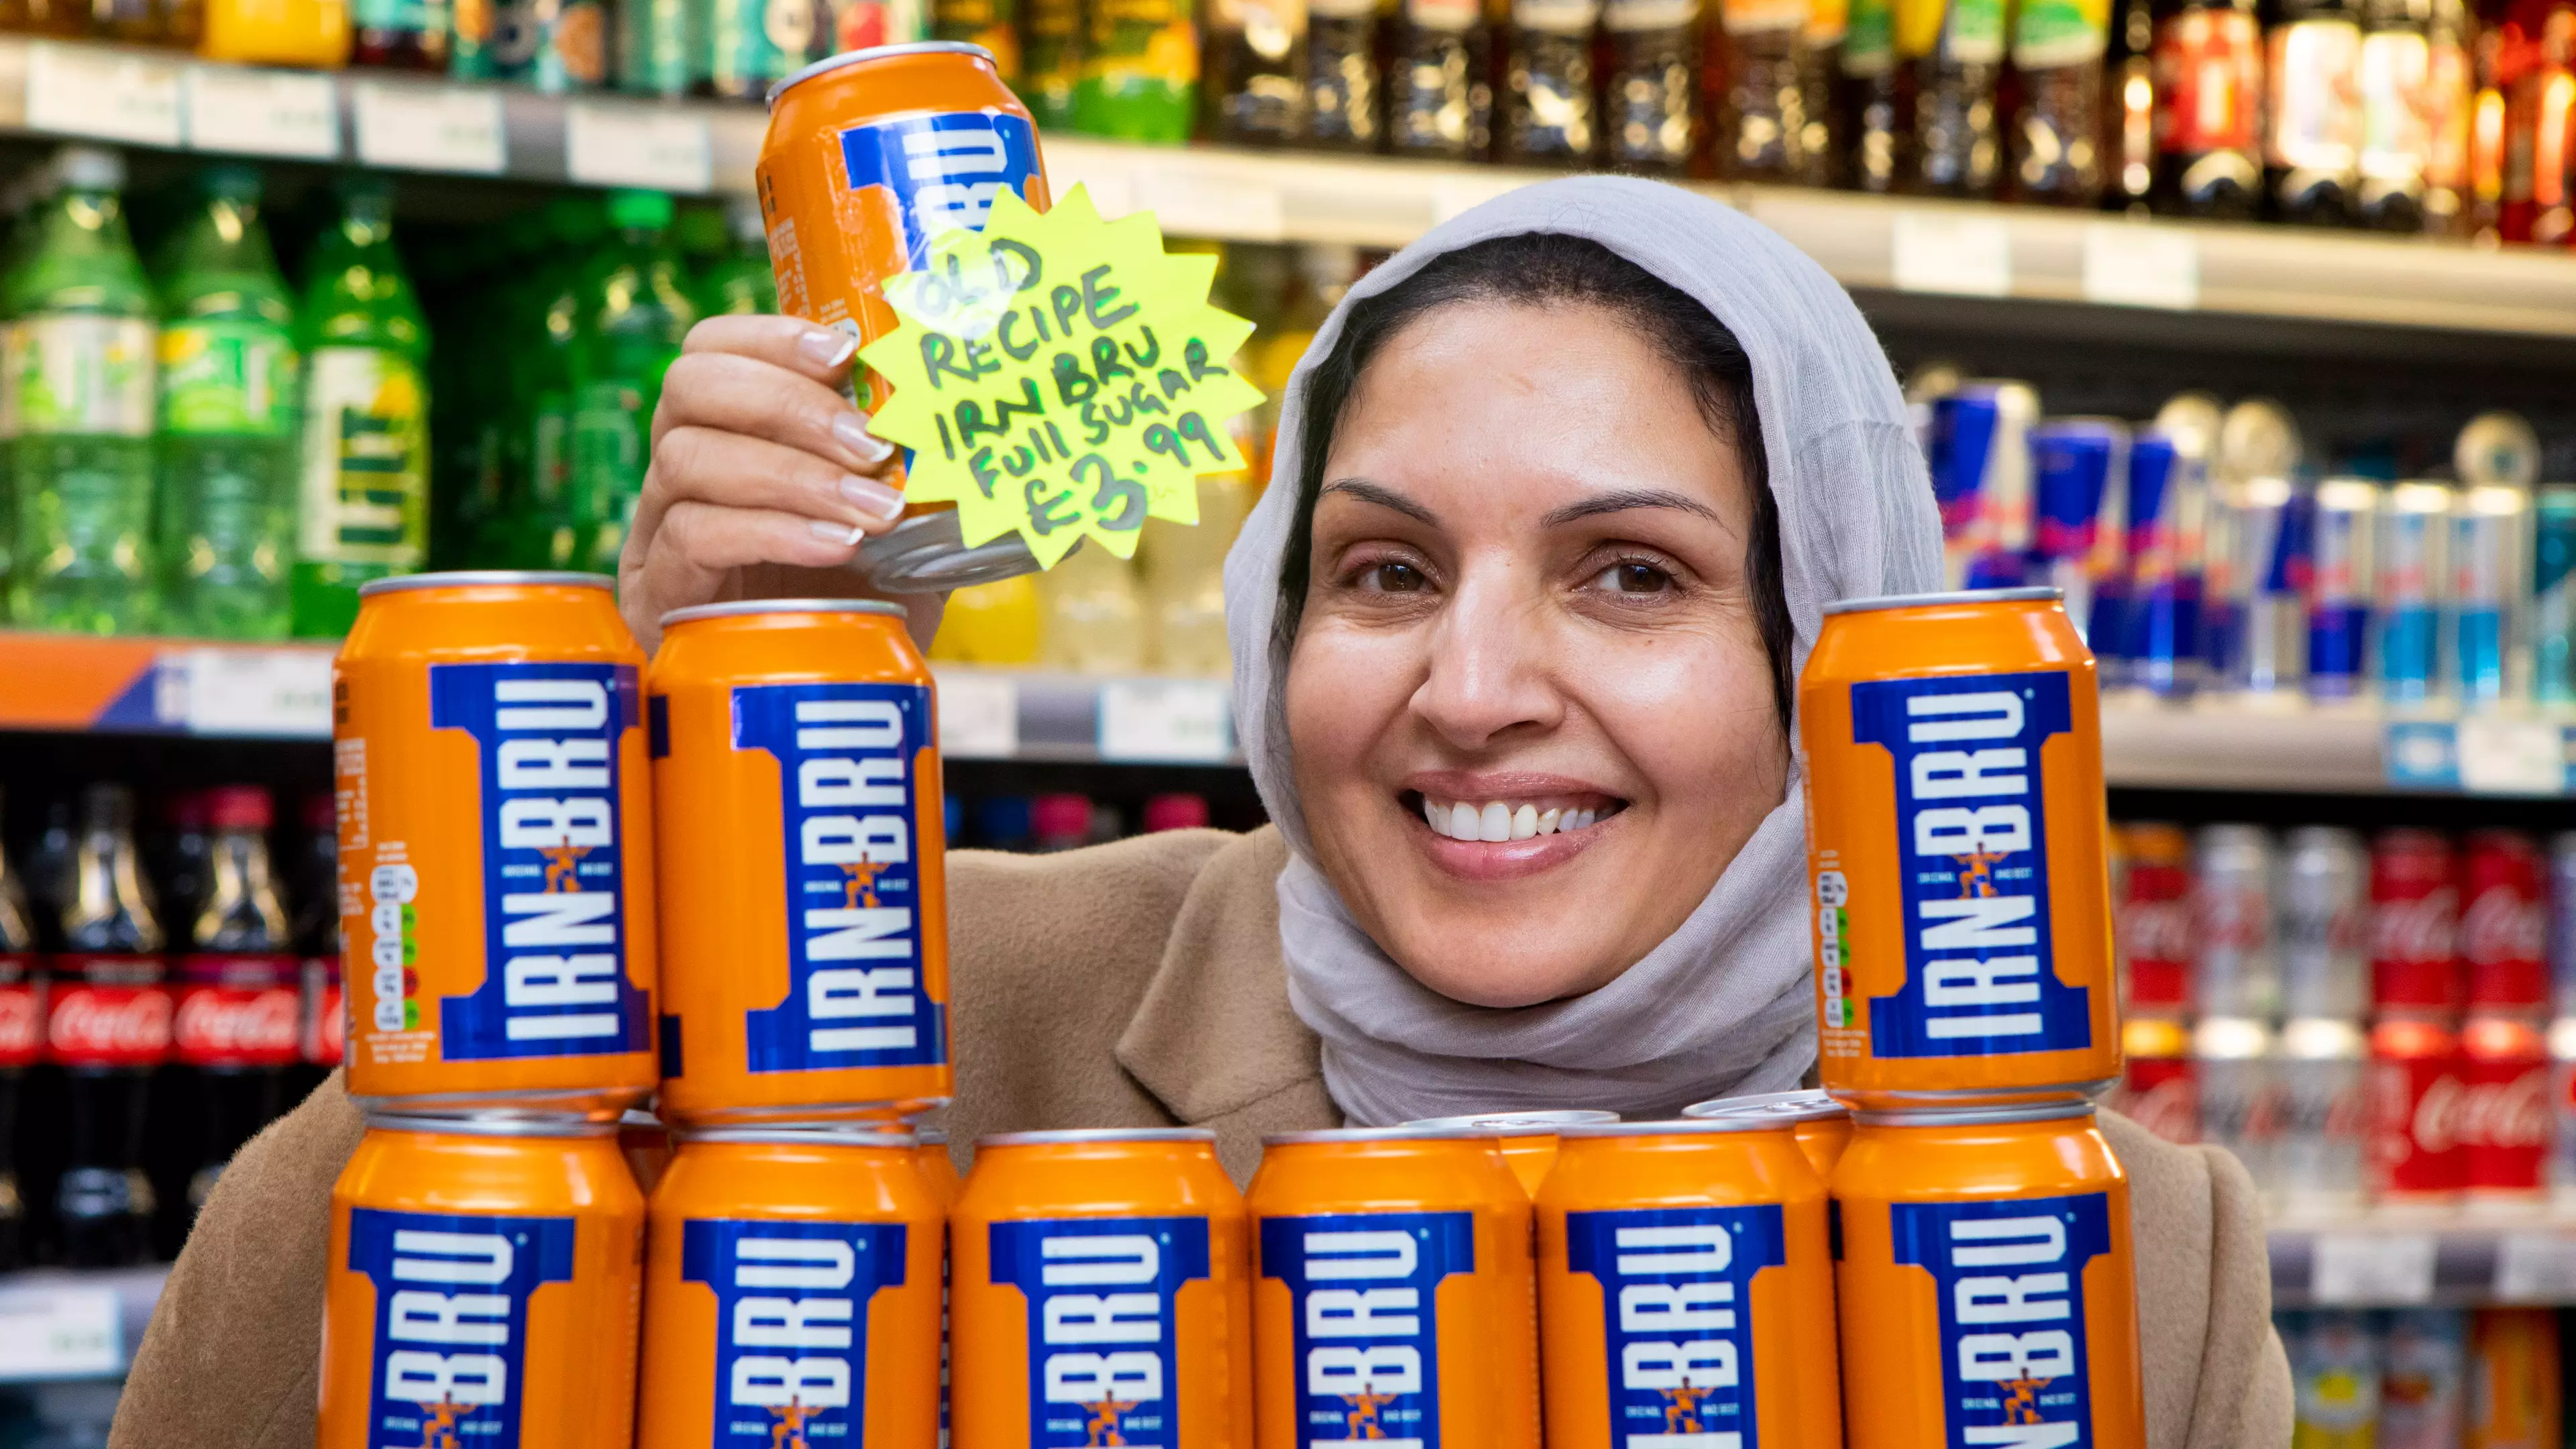 Shopkeeper Sells Original Full Sugar Irn-Bru For £3.99 A Can